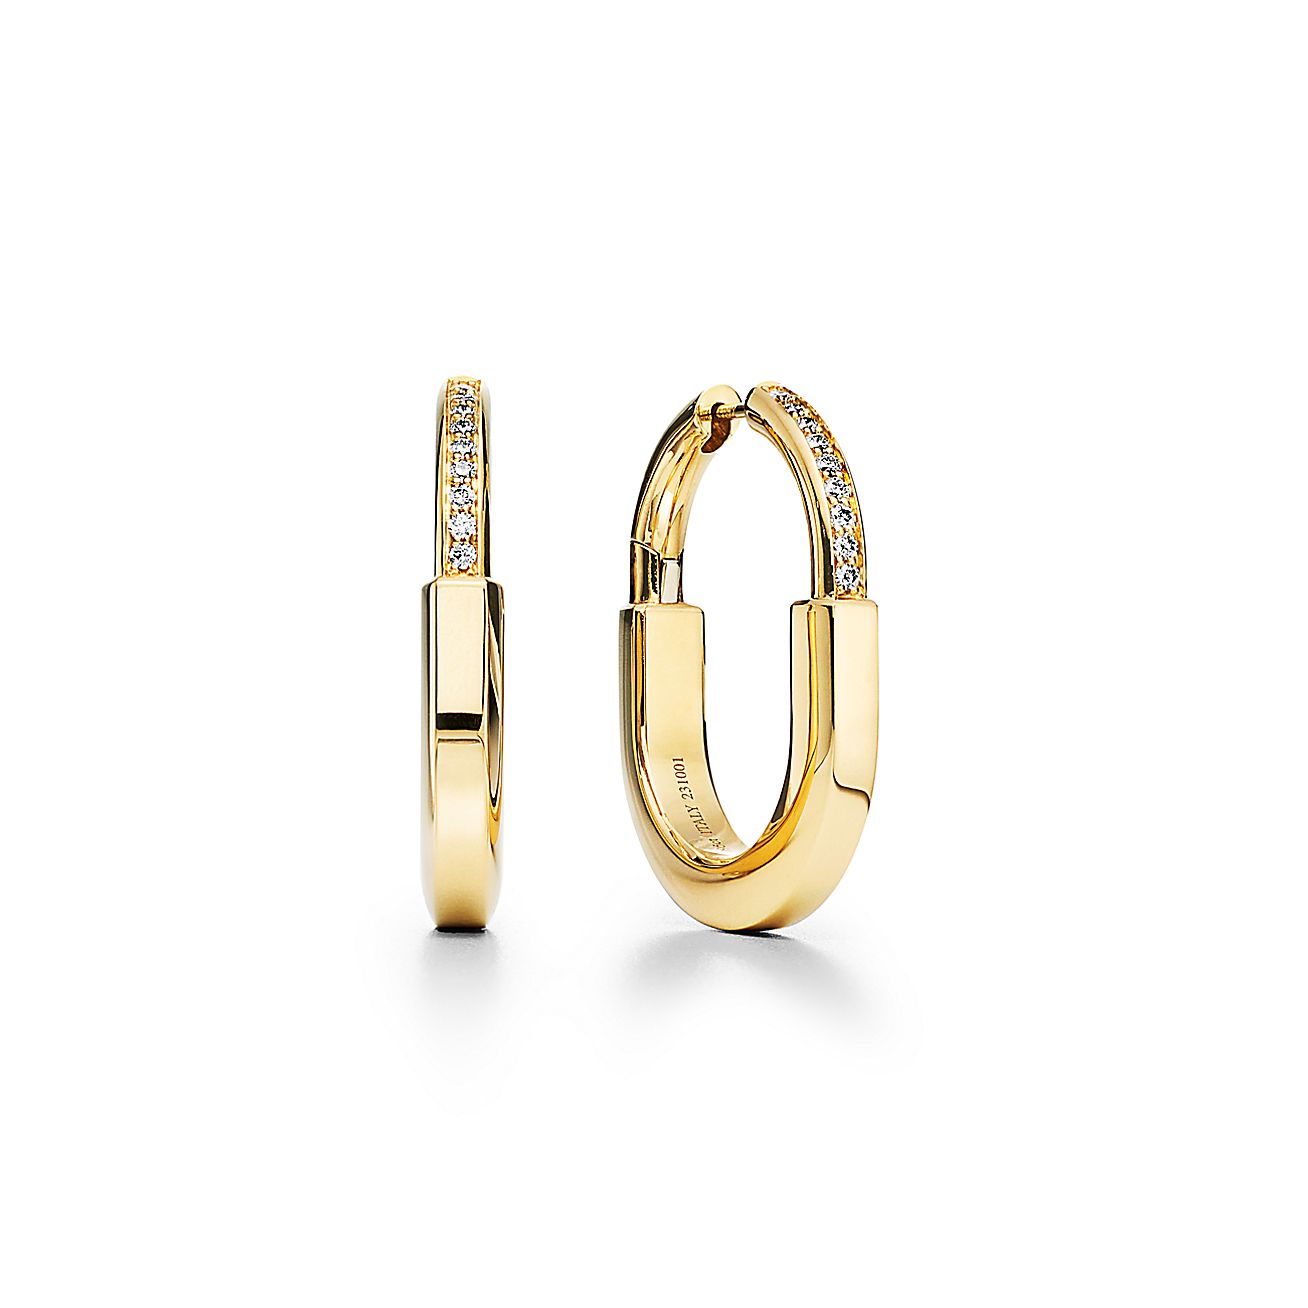 Tiffany Lock Pendant in Yellow Gold with Diamonds